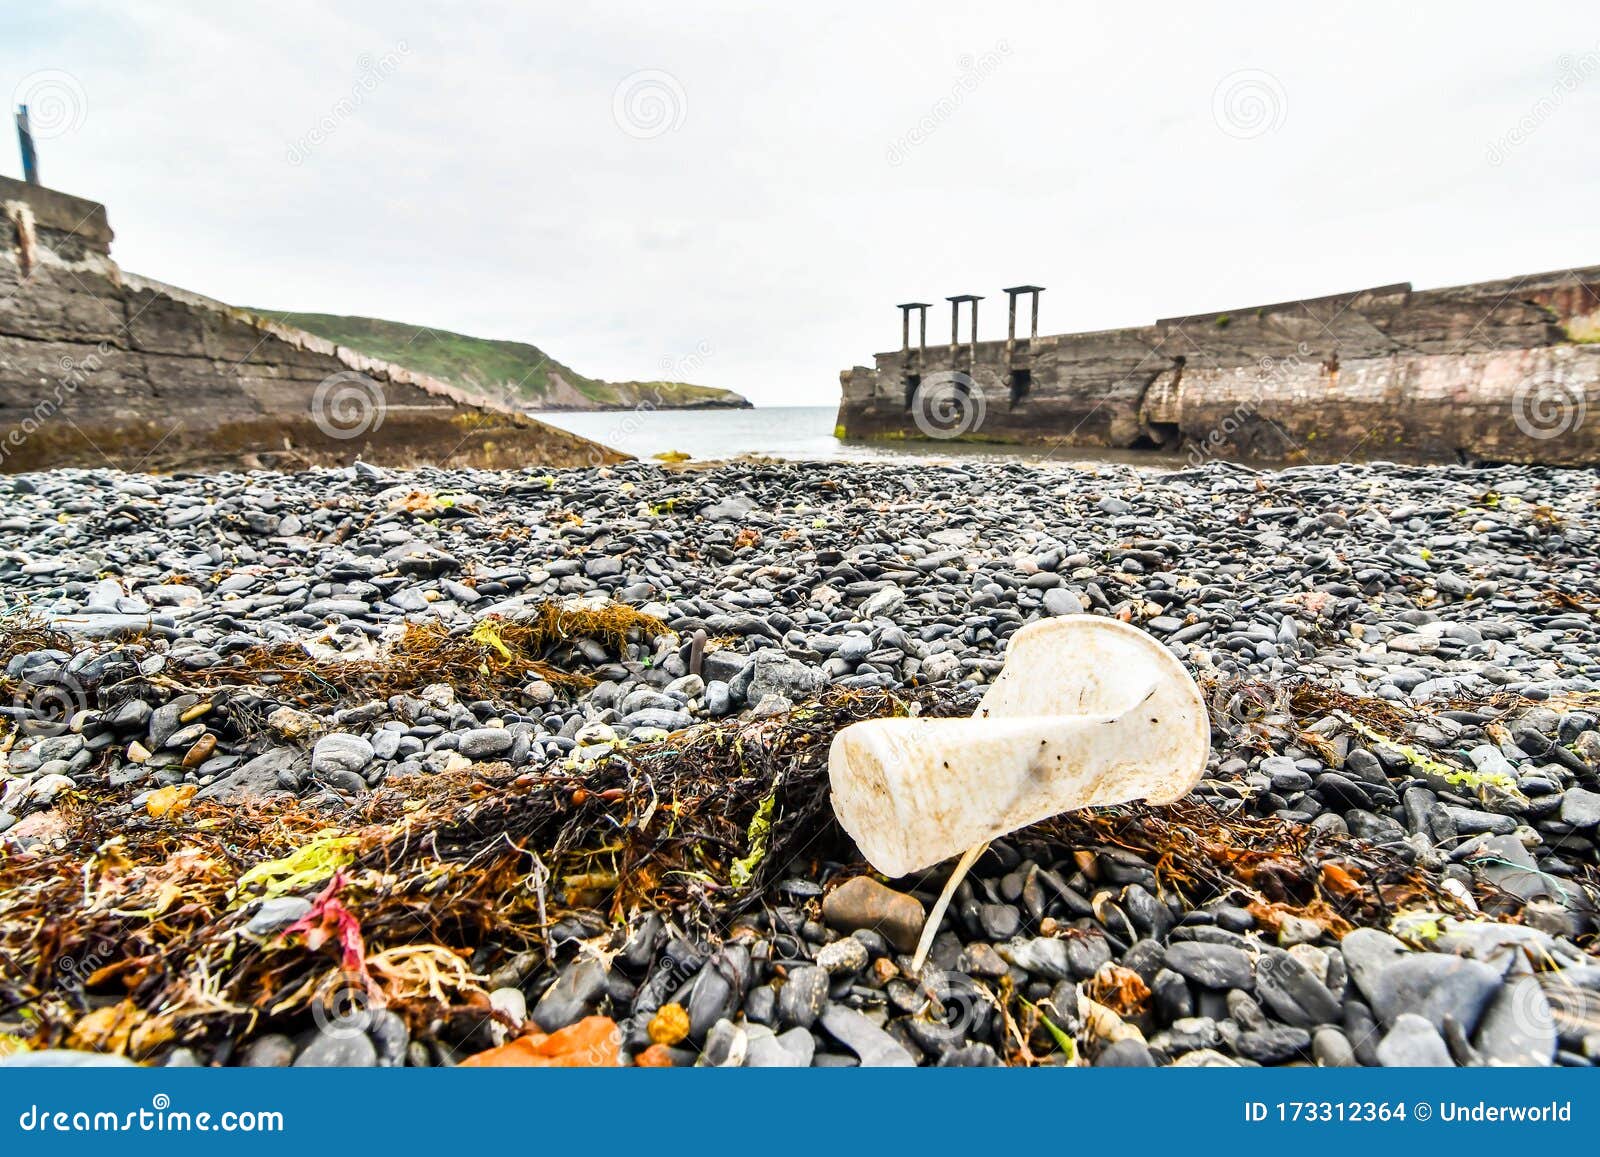 garbage on beach, photo as a background , in principado de asturias, spain europe